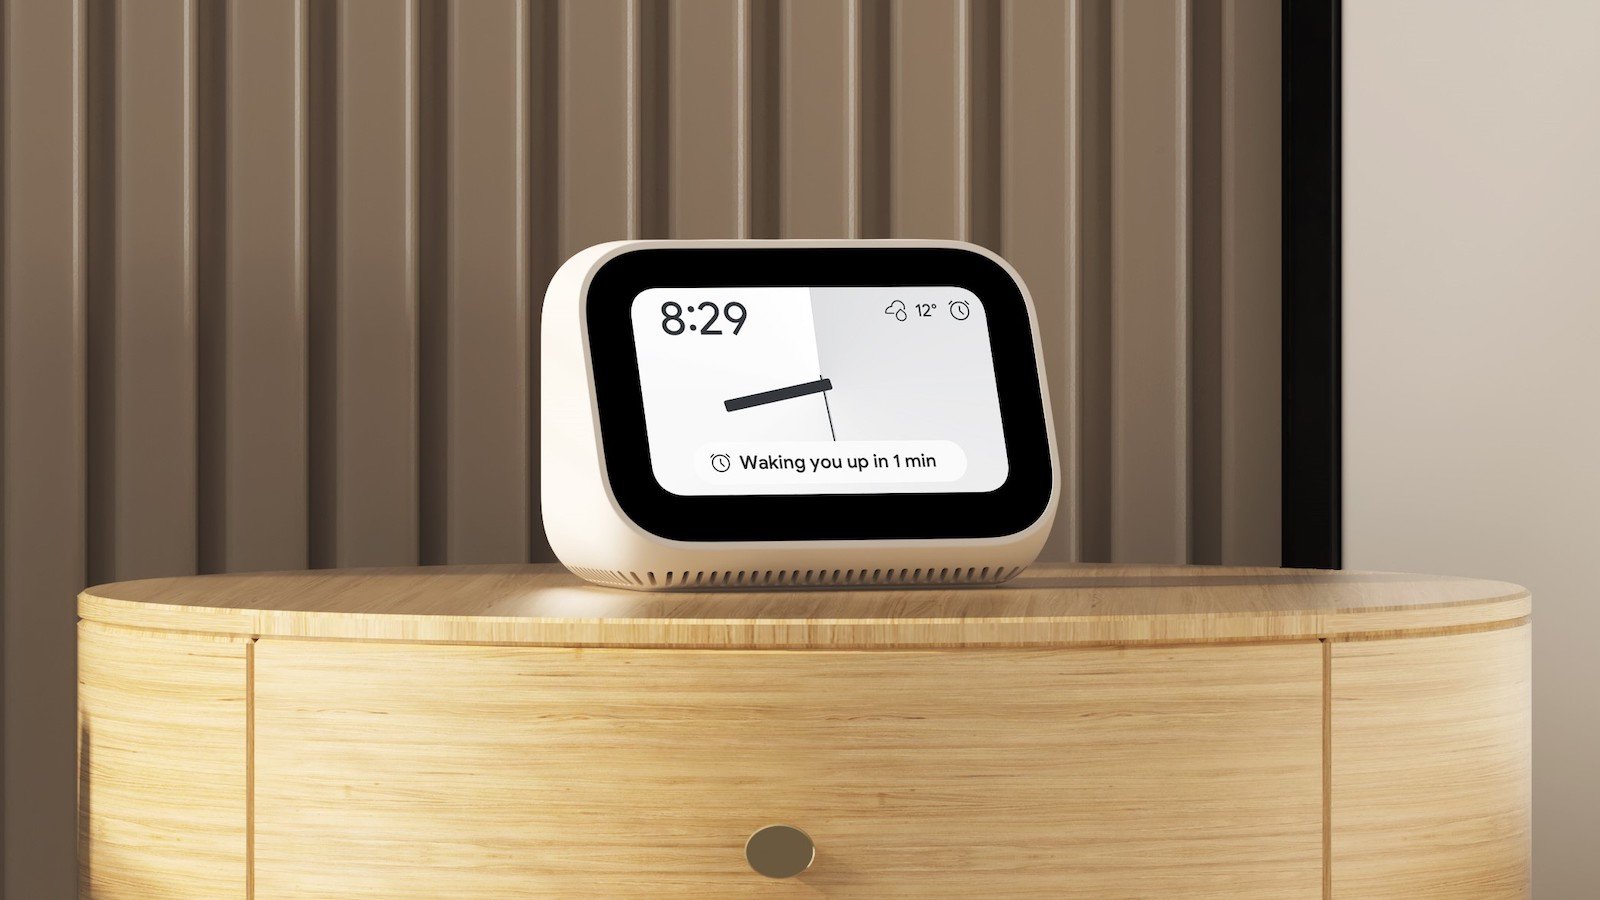 Xiaomi Mi Smart Clock also functions as a digital photo frame